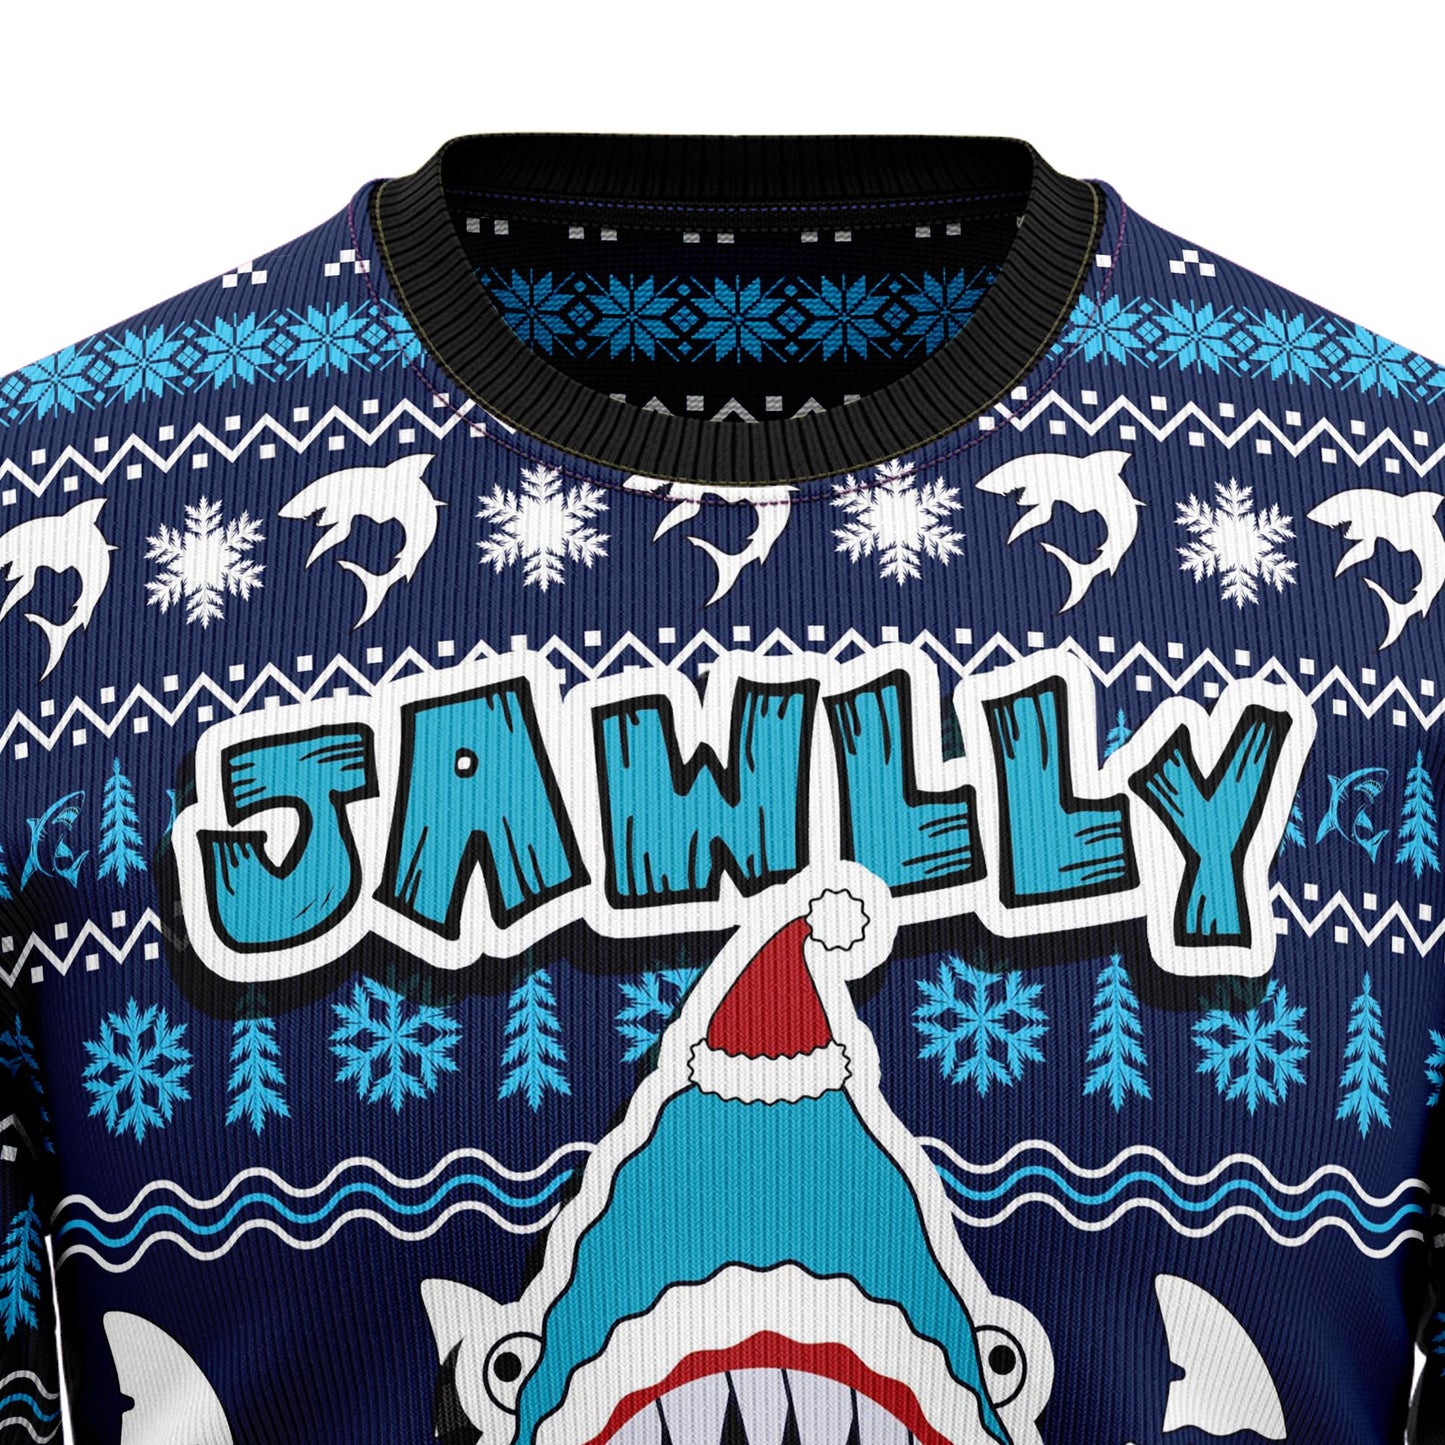 Shark Jawlly Christmas TY210 Ugly Christmas Sweater